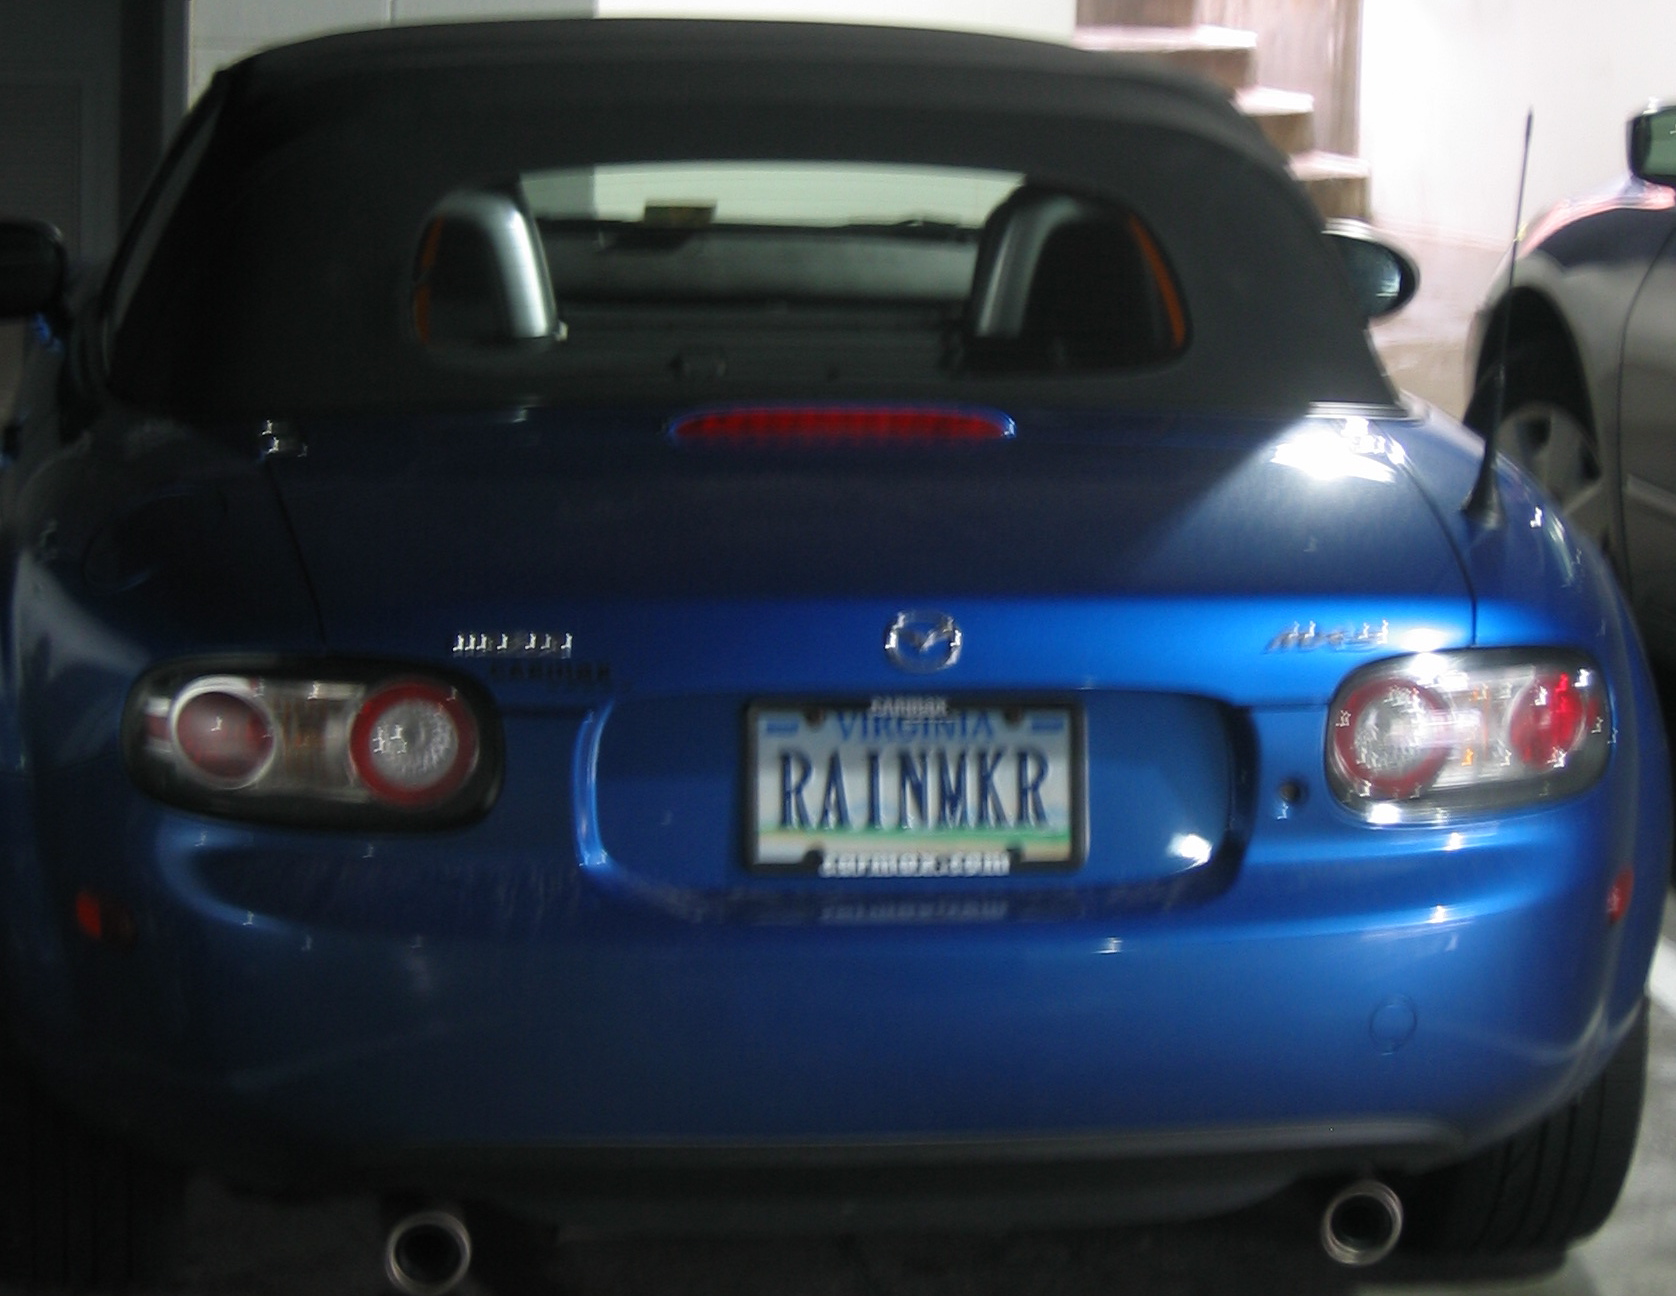 RAINMKR plate on a convertible